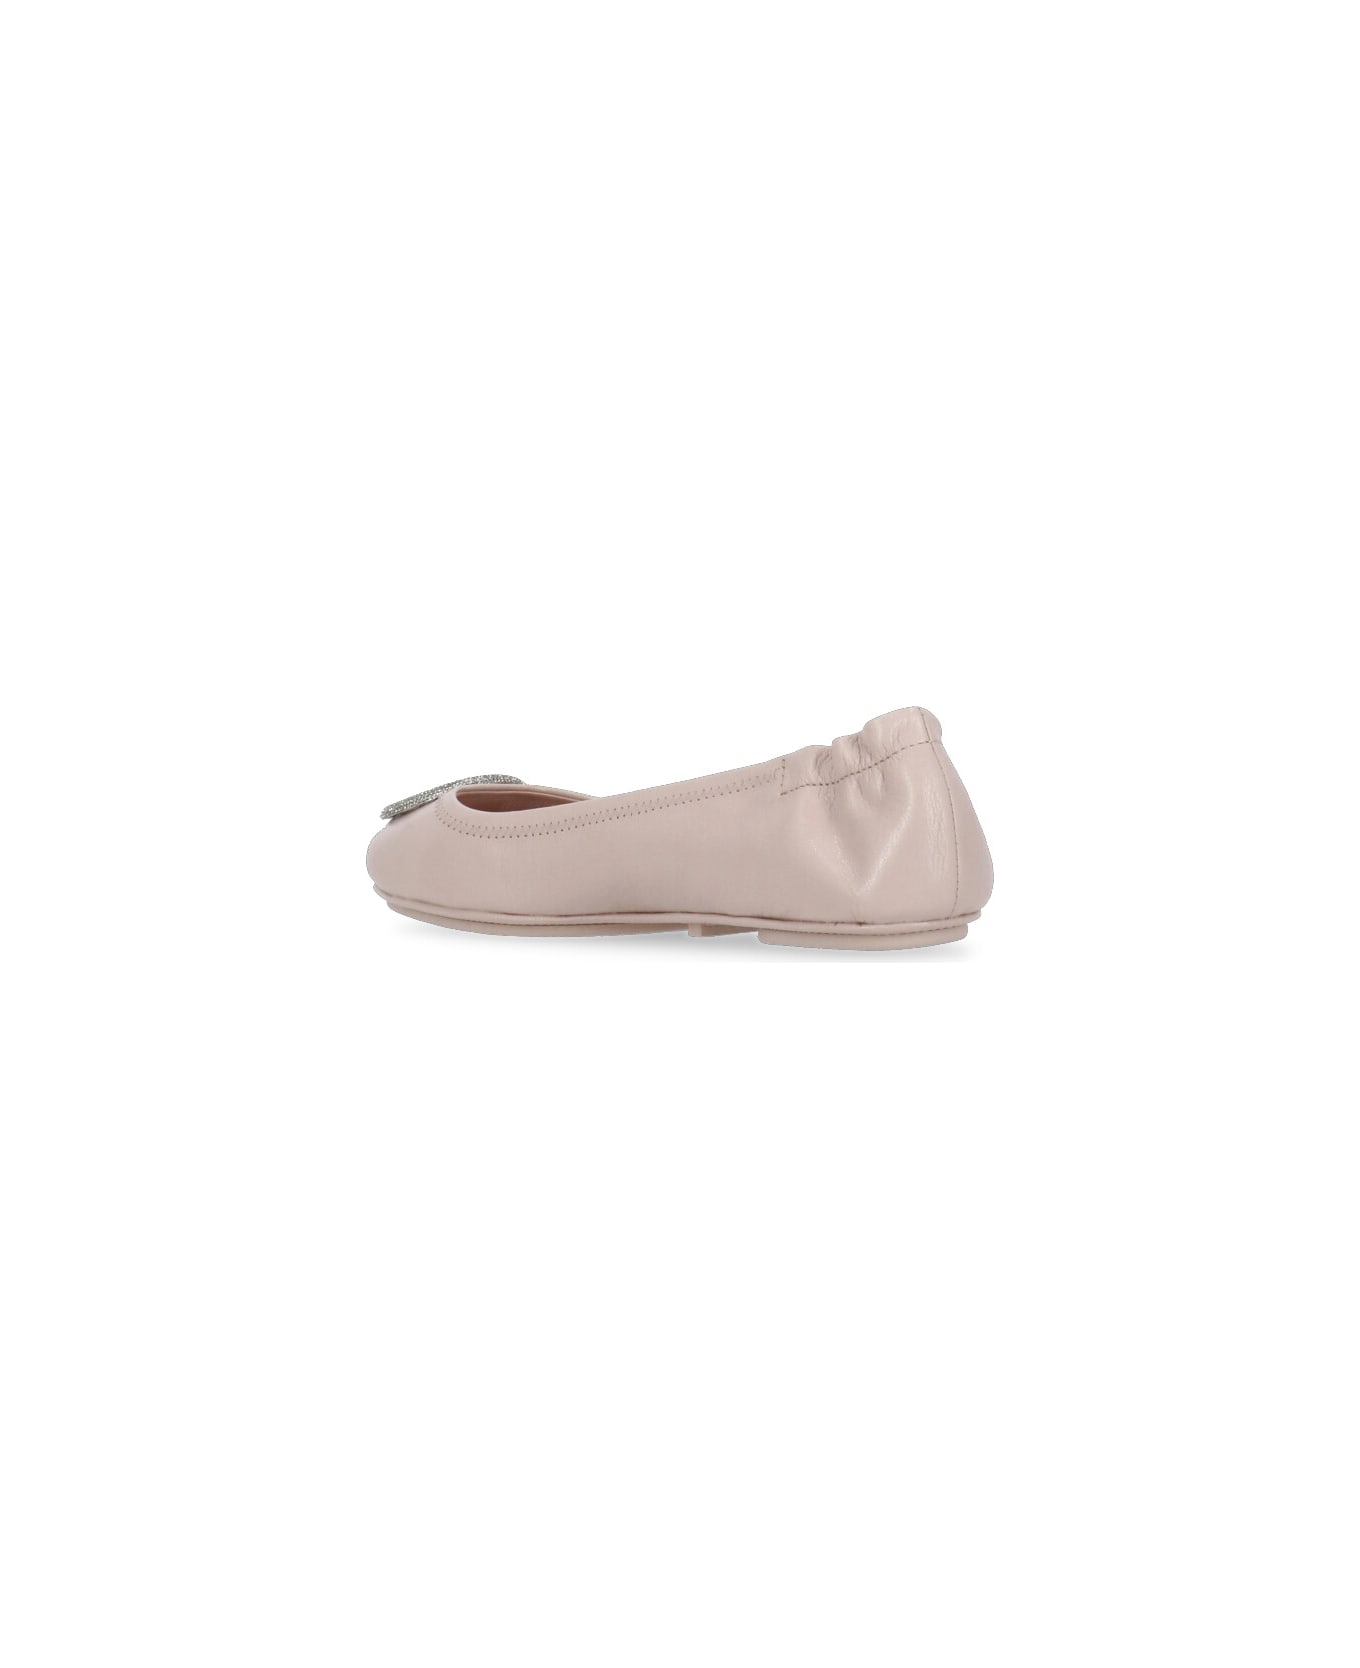 Tory Burch Minnie Ballerina Shoes - Pink フラットシューズ